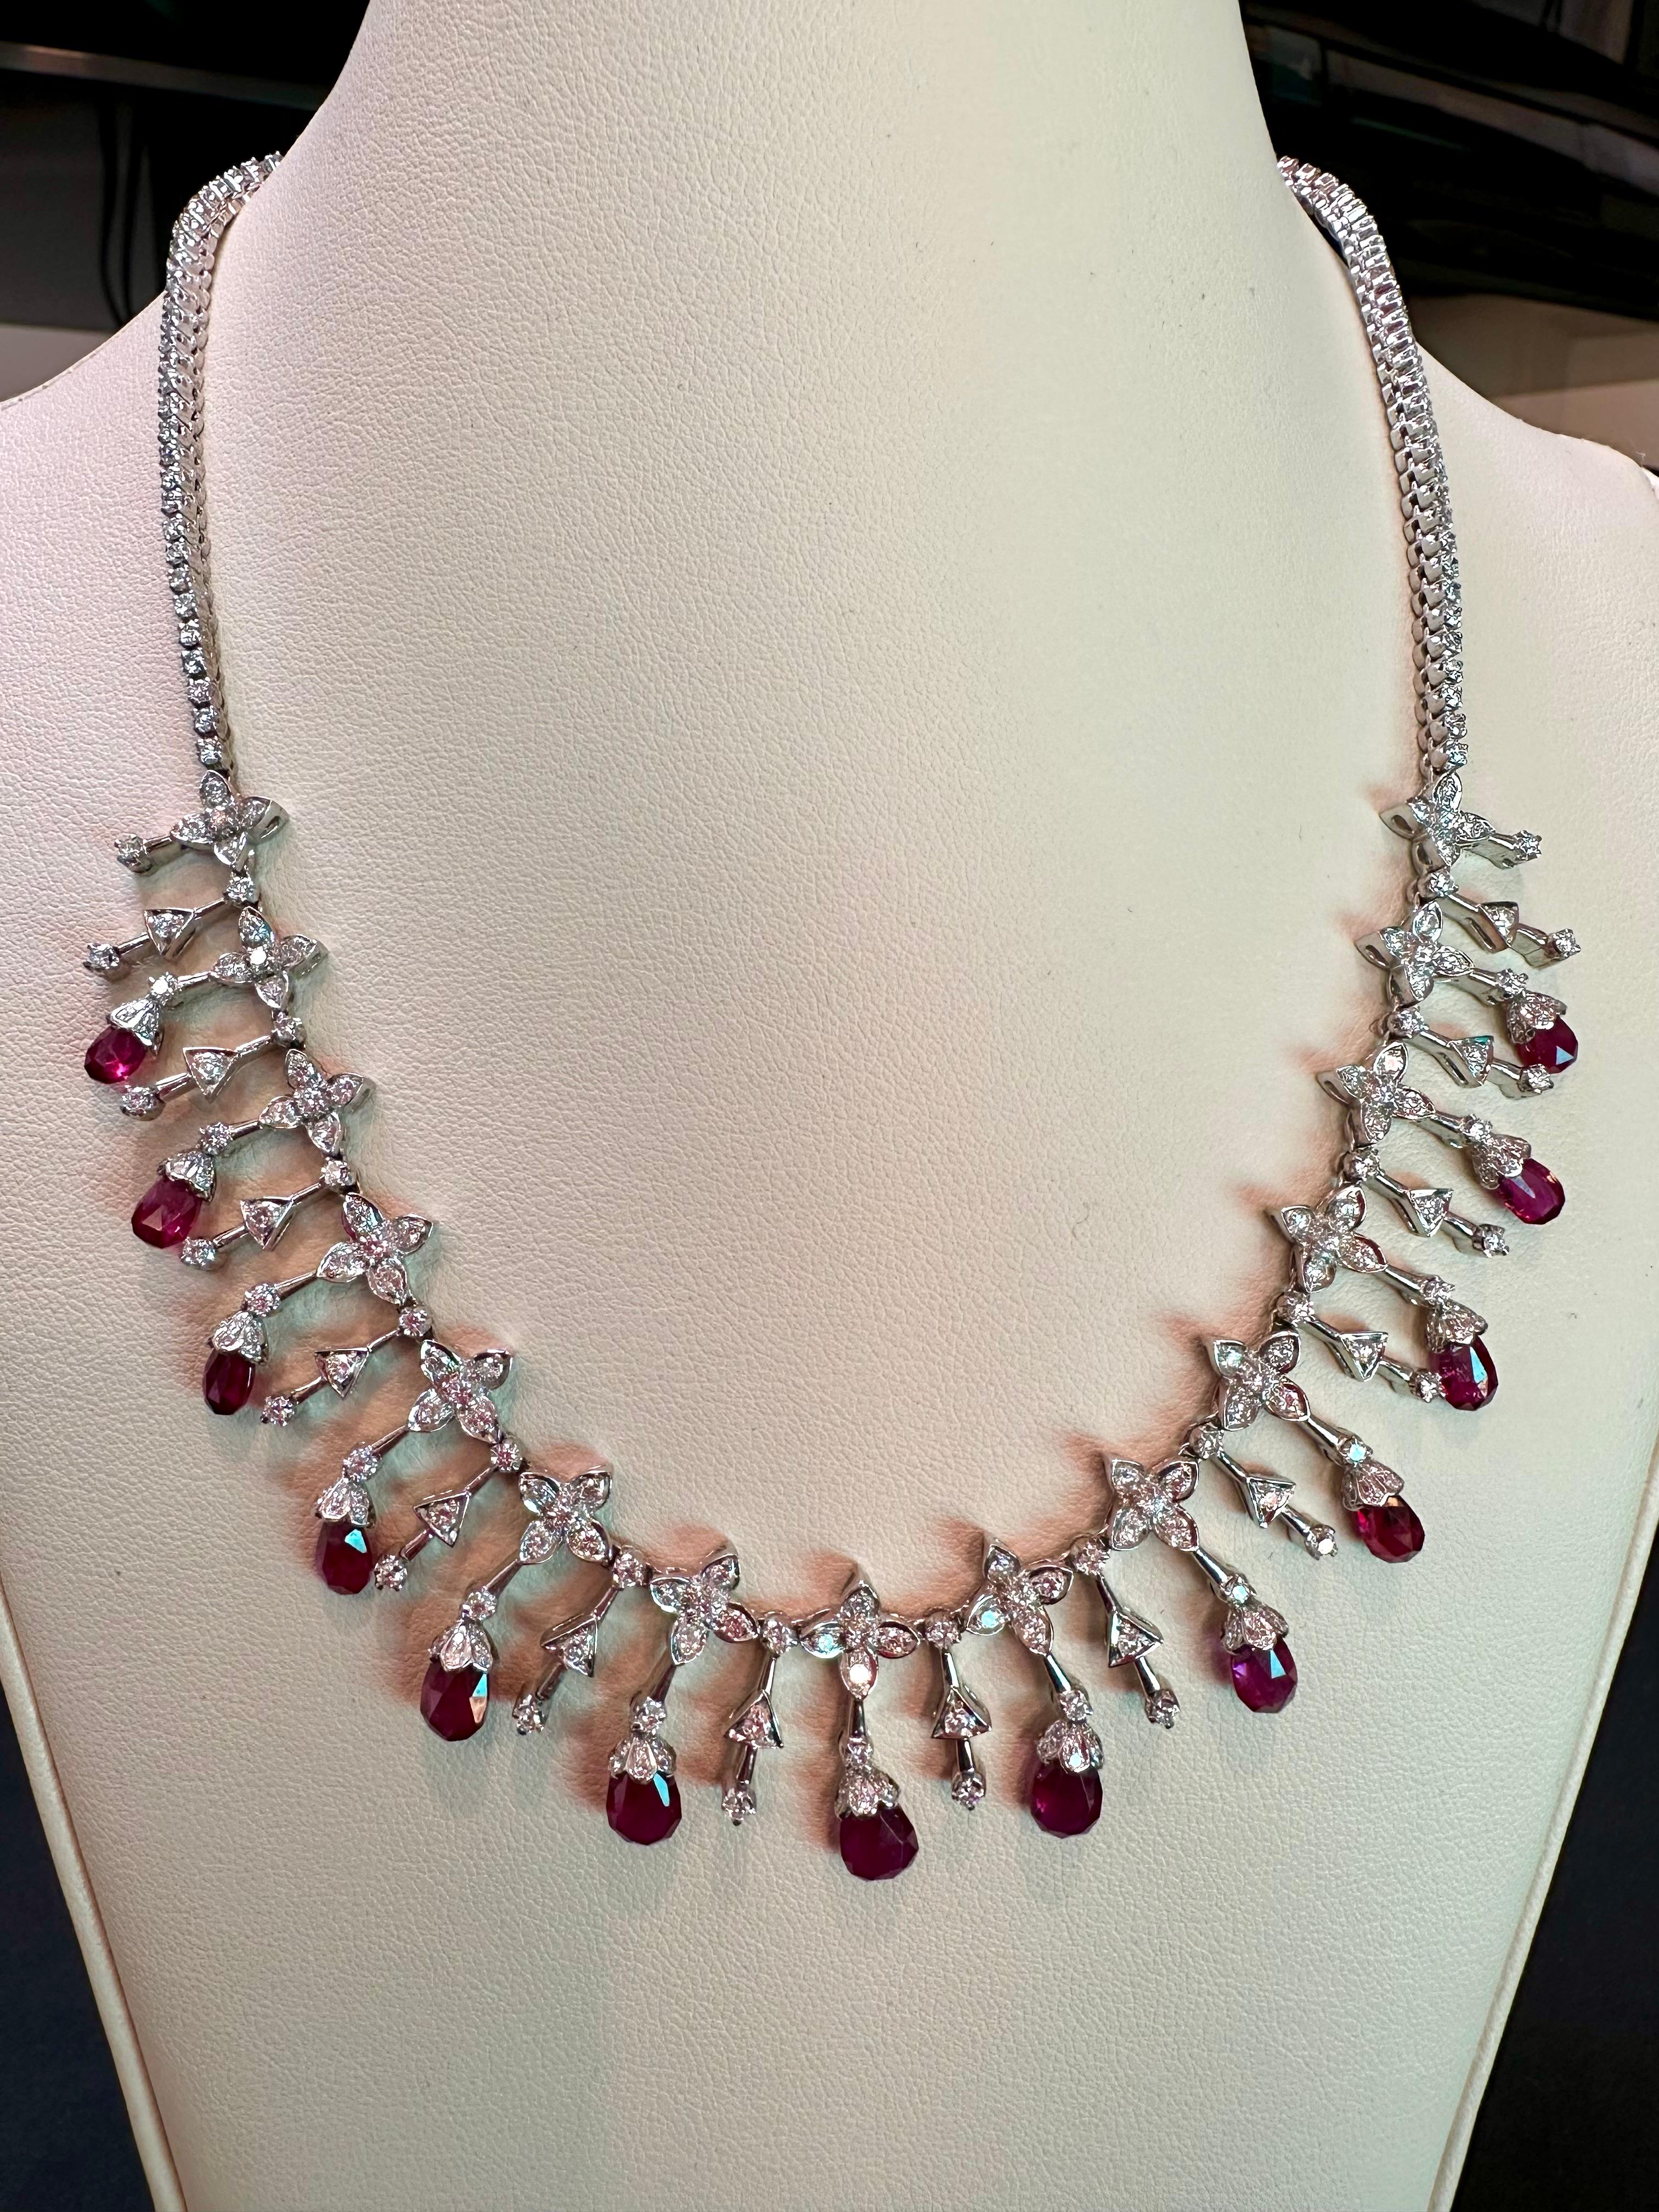 18 Ct Natural Ruby Briolette & 8 Ct Diamond Necklace 18 Karat White Gold, Estate For Sale 9